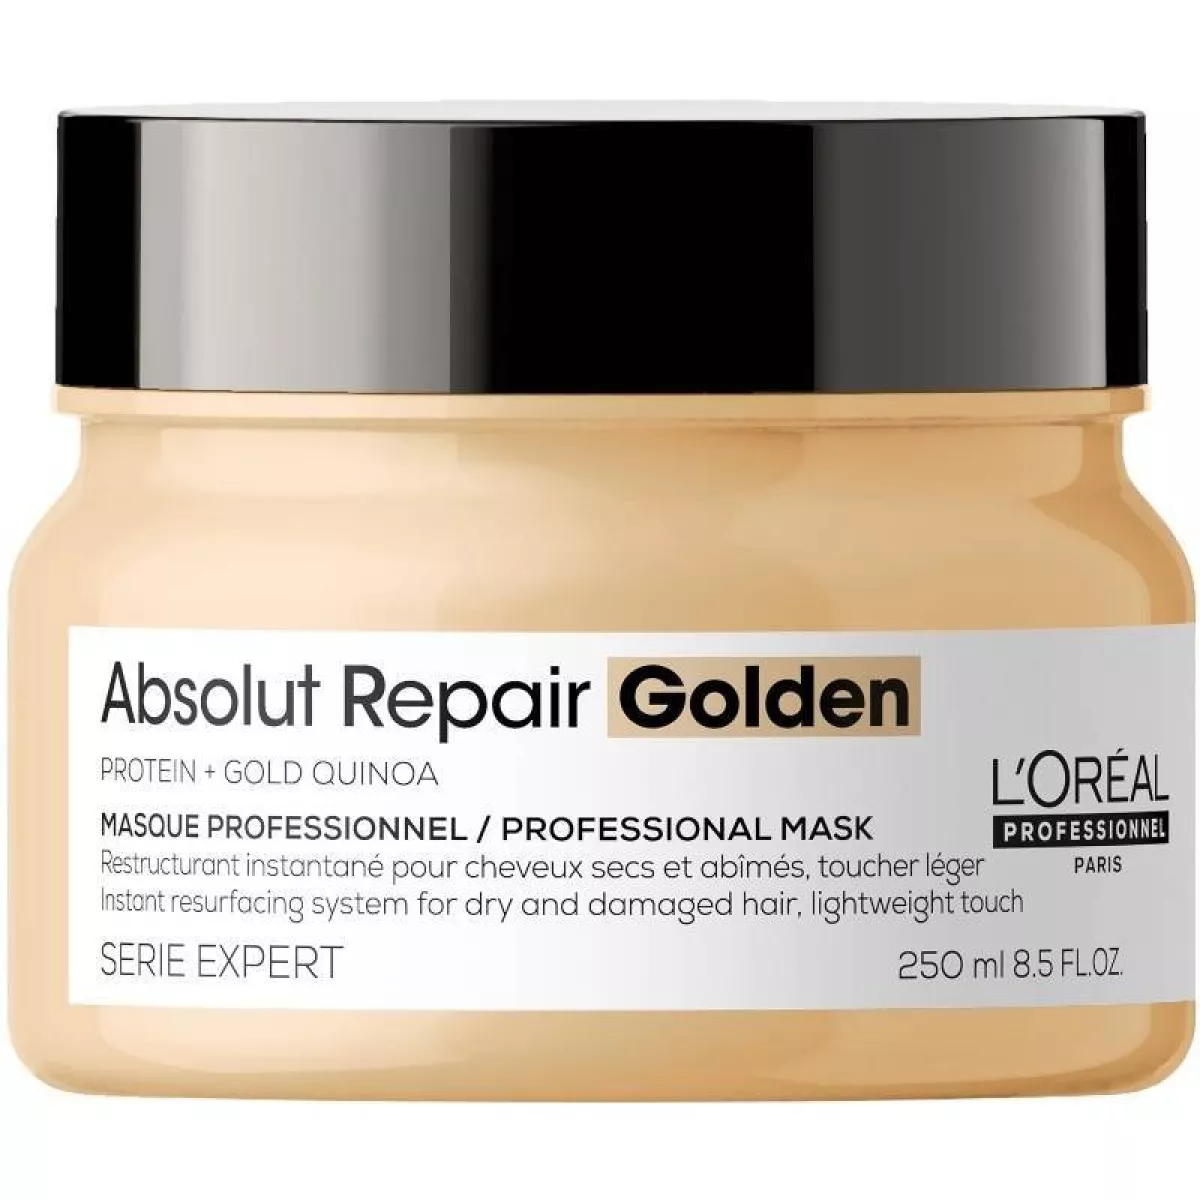 #1 - L'Oreal Pro Serie Expert Absolut Repair Golden Masque 250 ml